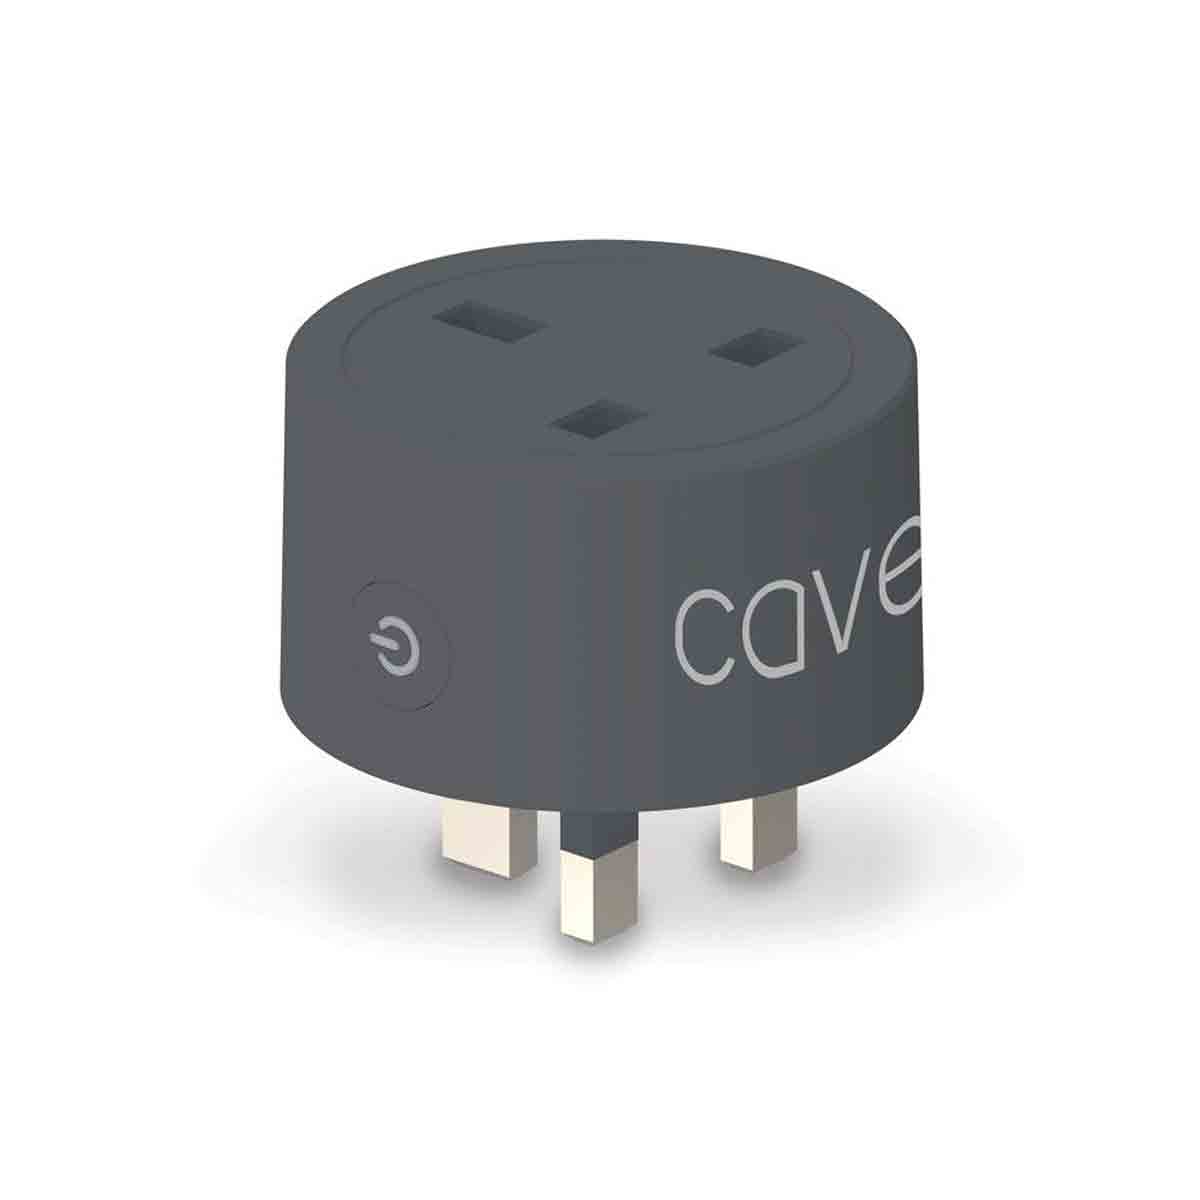 Veho Cave Smart Plug - 3 PIN UK/IRE/HK